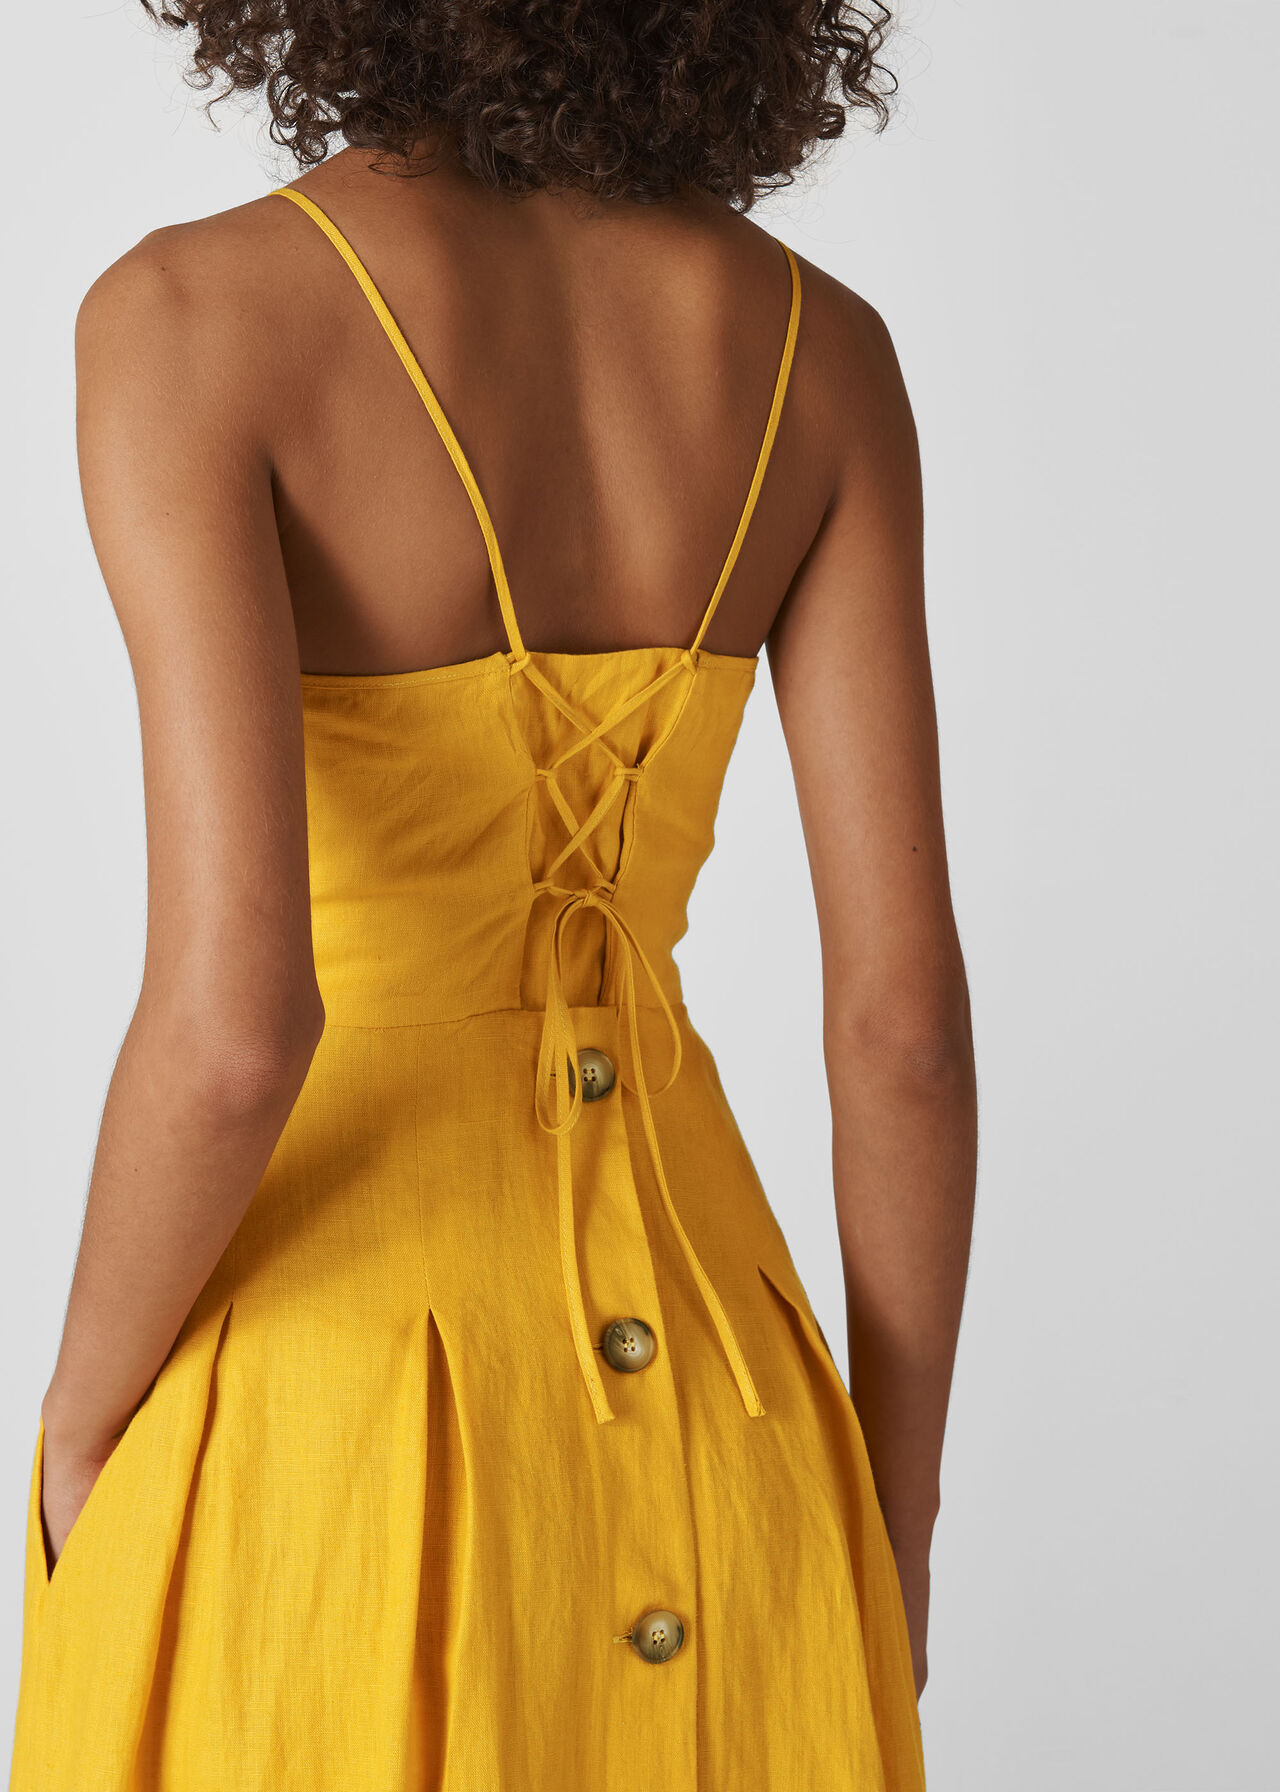 Duffy Linen Strappy Dress Yellow